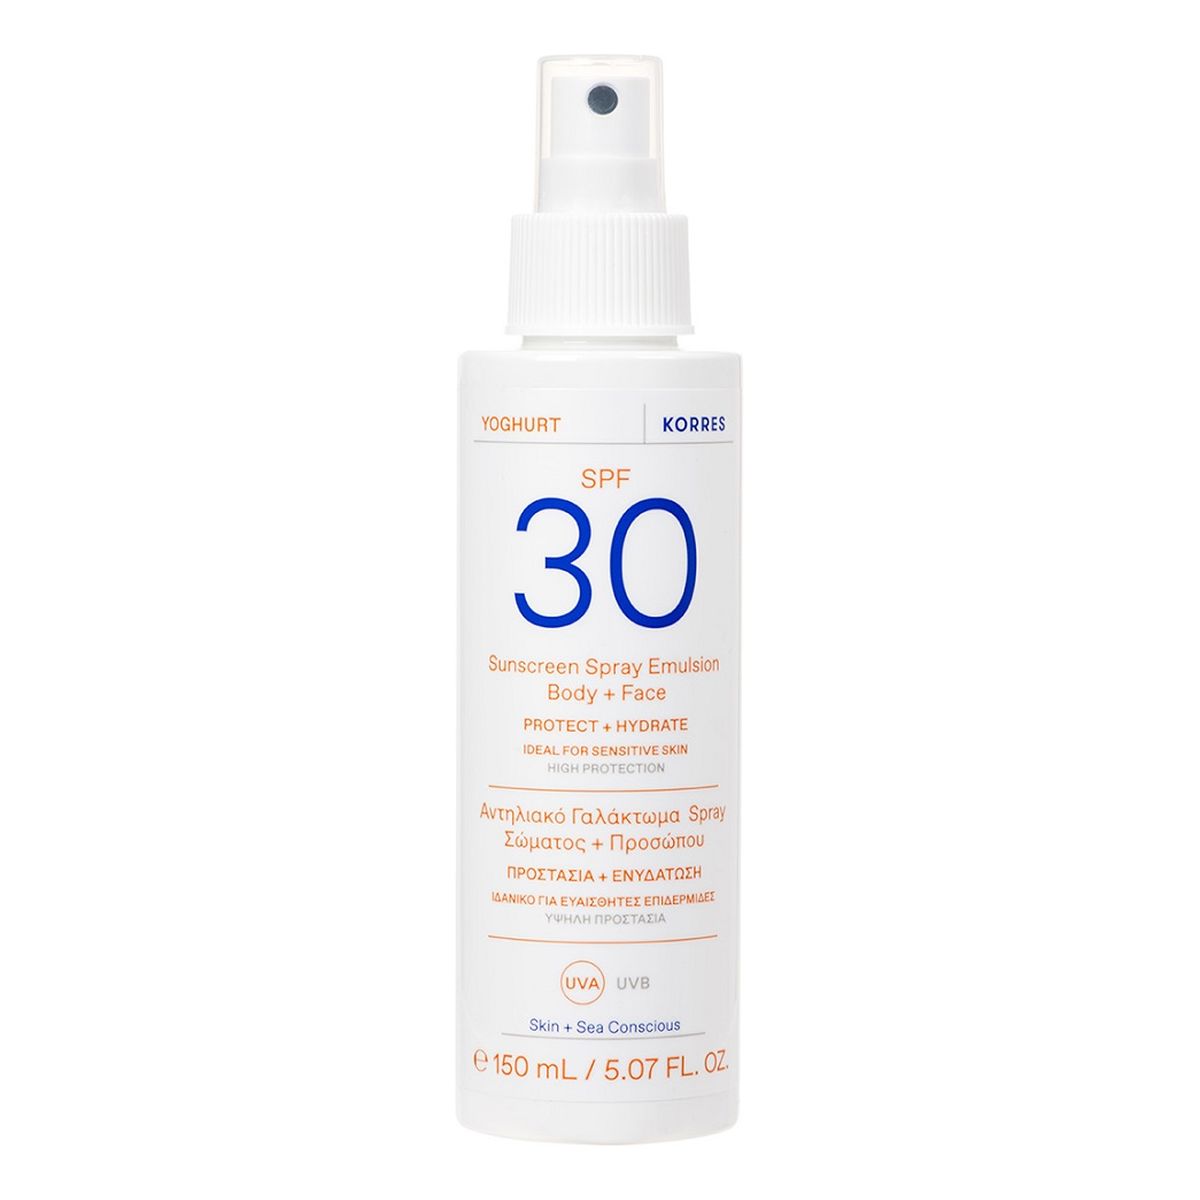 Korres Yoghurt Sunscreen Spray Emulsion Body + Face Emulsja ochronna w sprayu do ciała i twarzy spf30 150ml